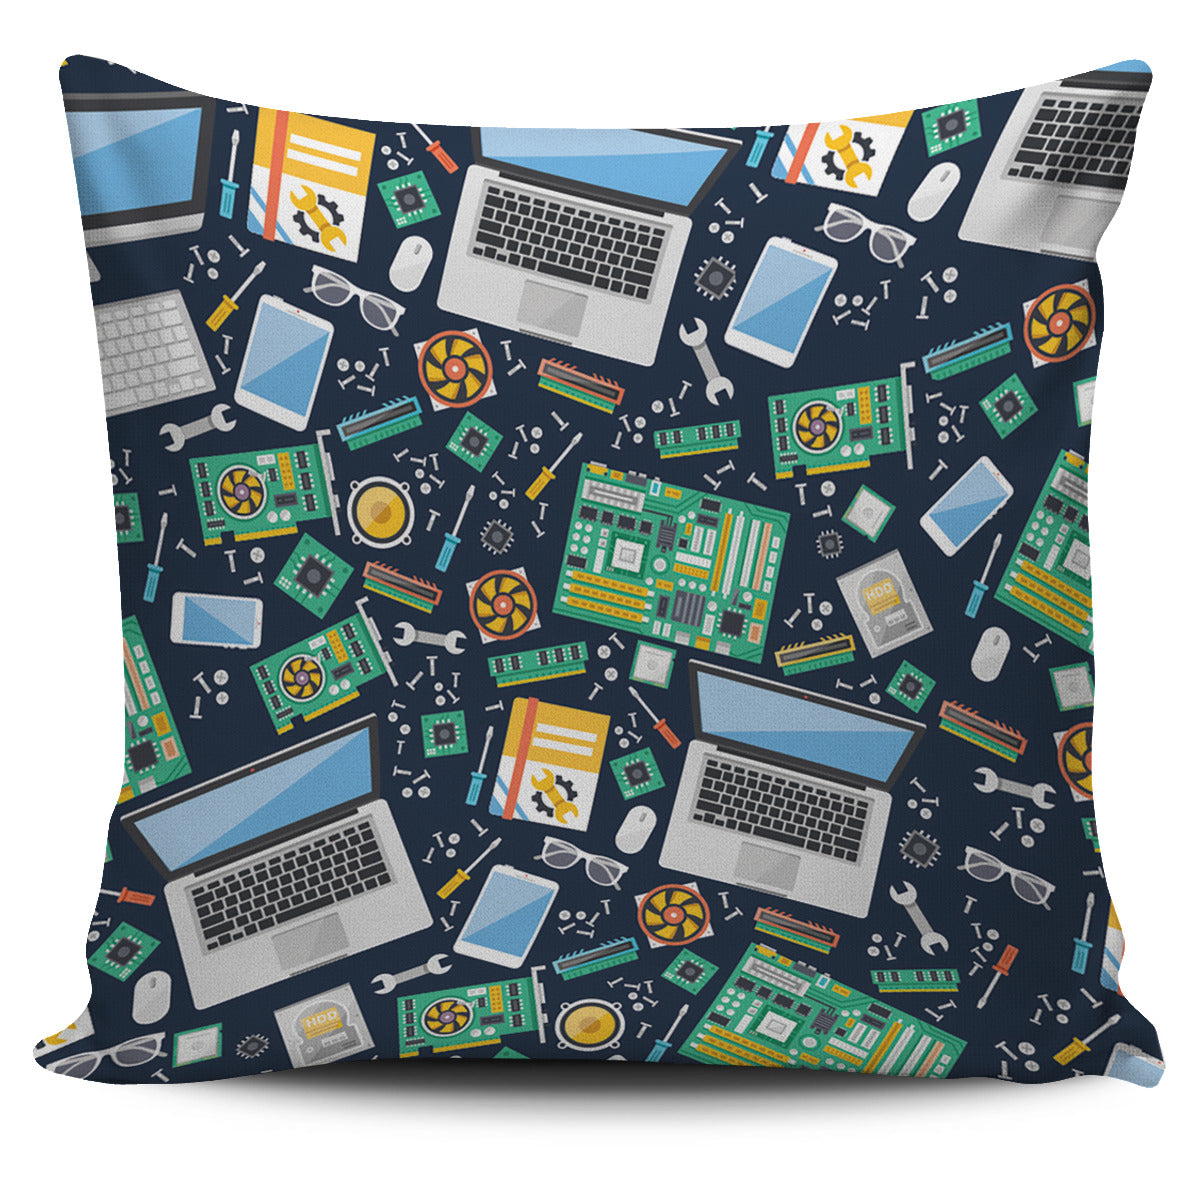 Computer Tech Pillow Cover